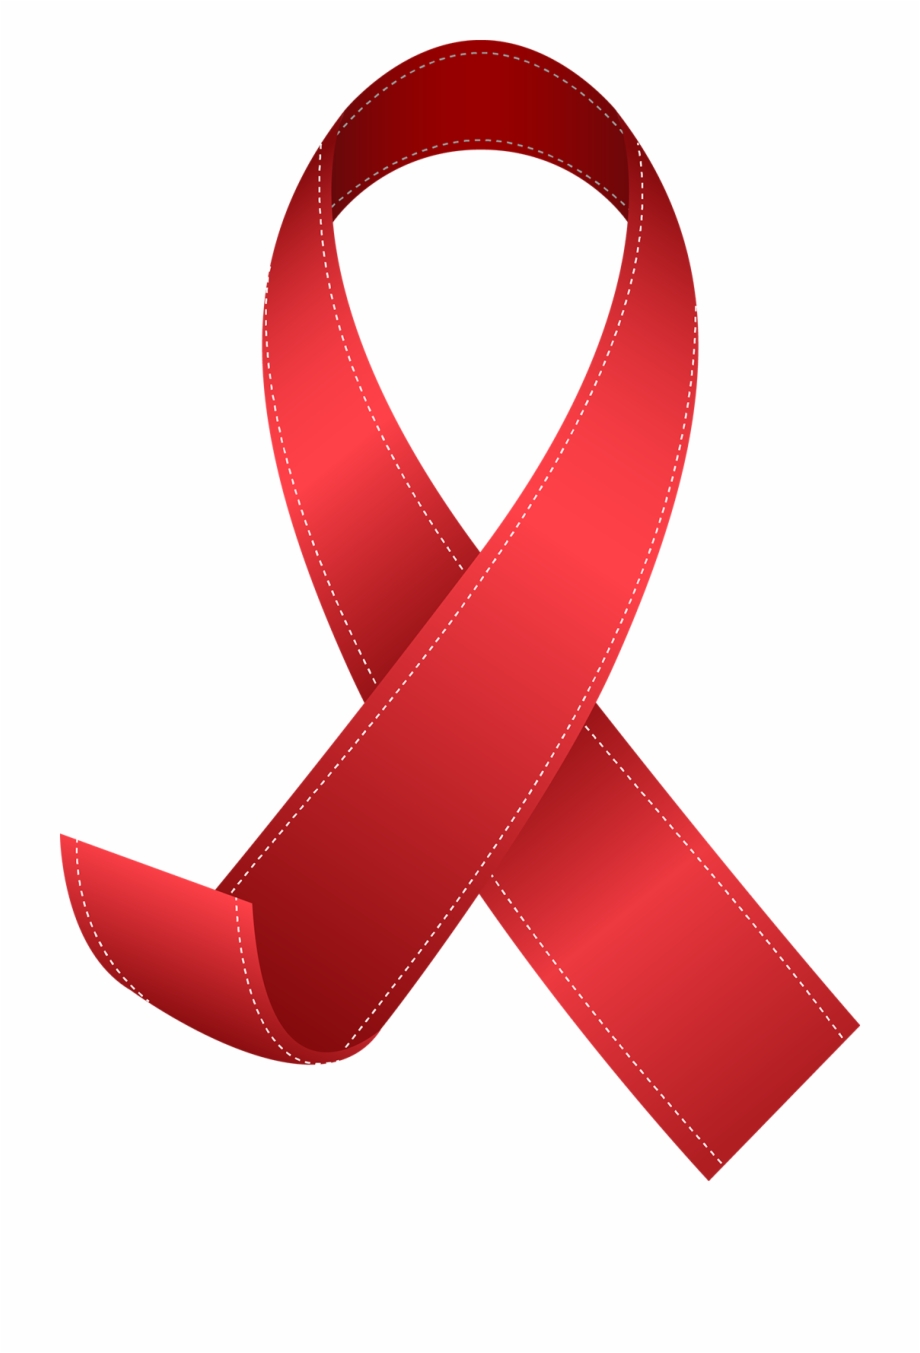 World Aids Day World Aids Day Ribbon Png